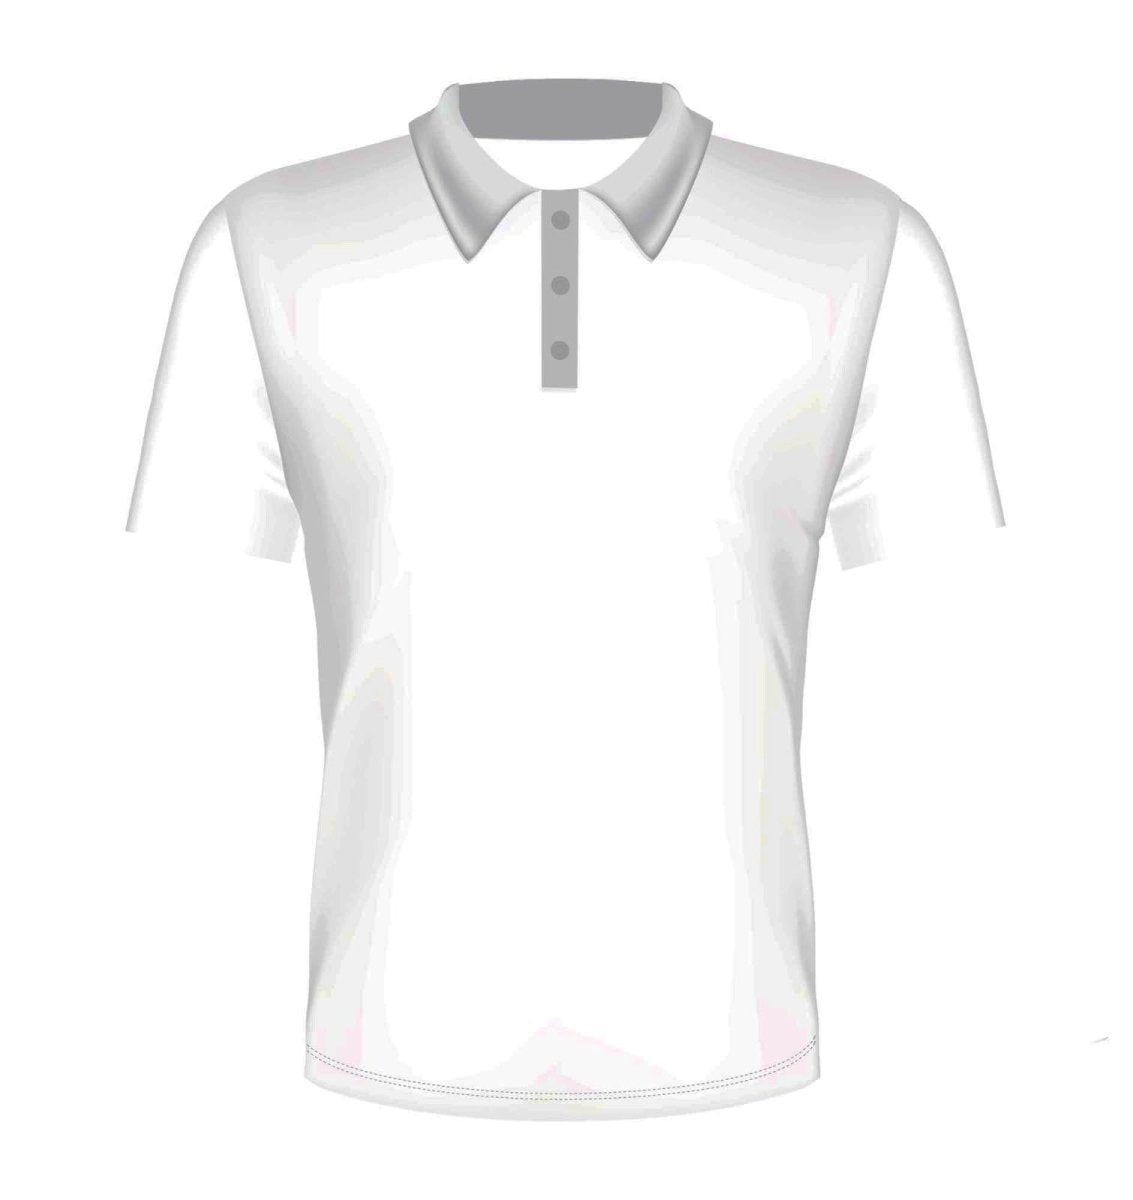 Custom Shirts - Sun Safe Apparel/ Fishing Shirts/ Work Shirts - Short Sleeve